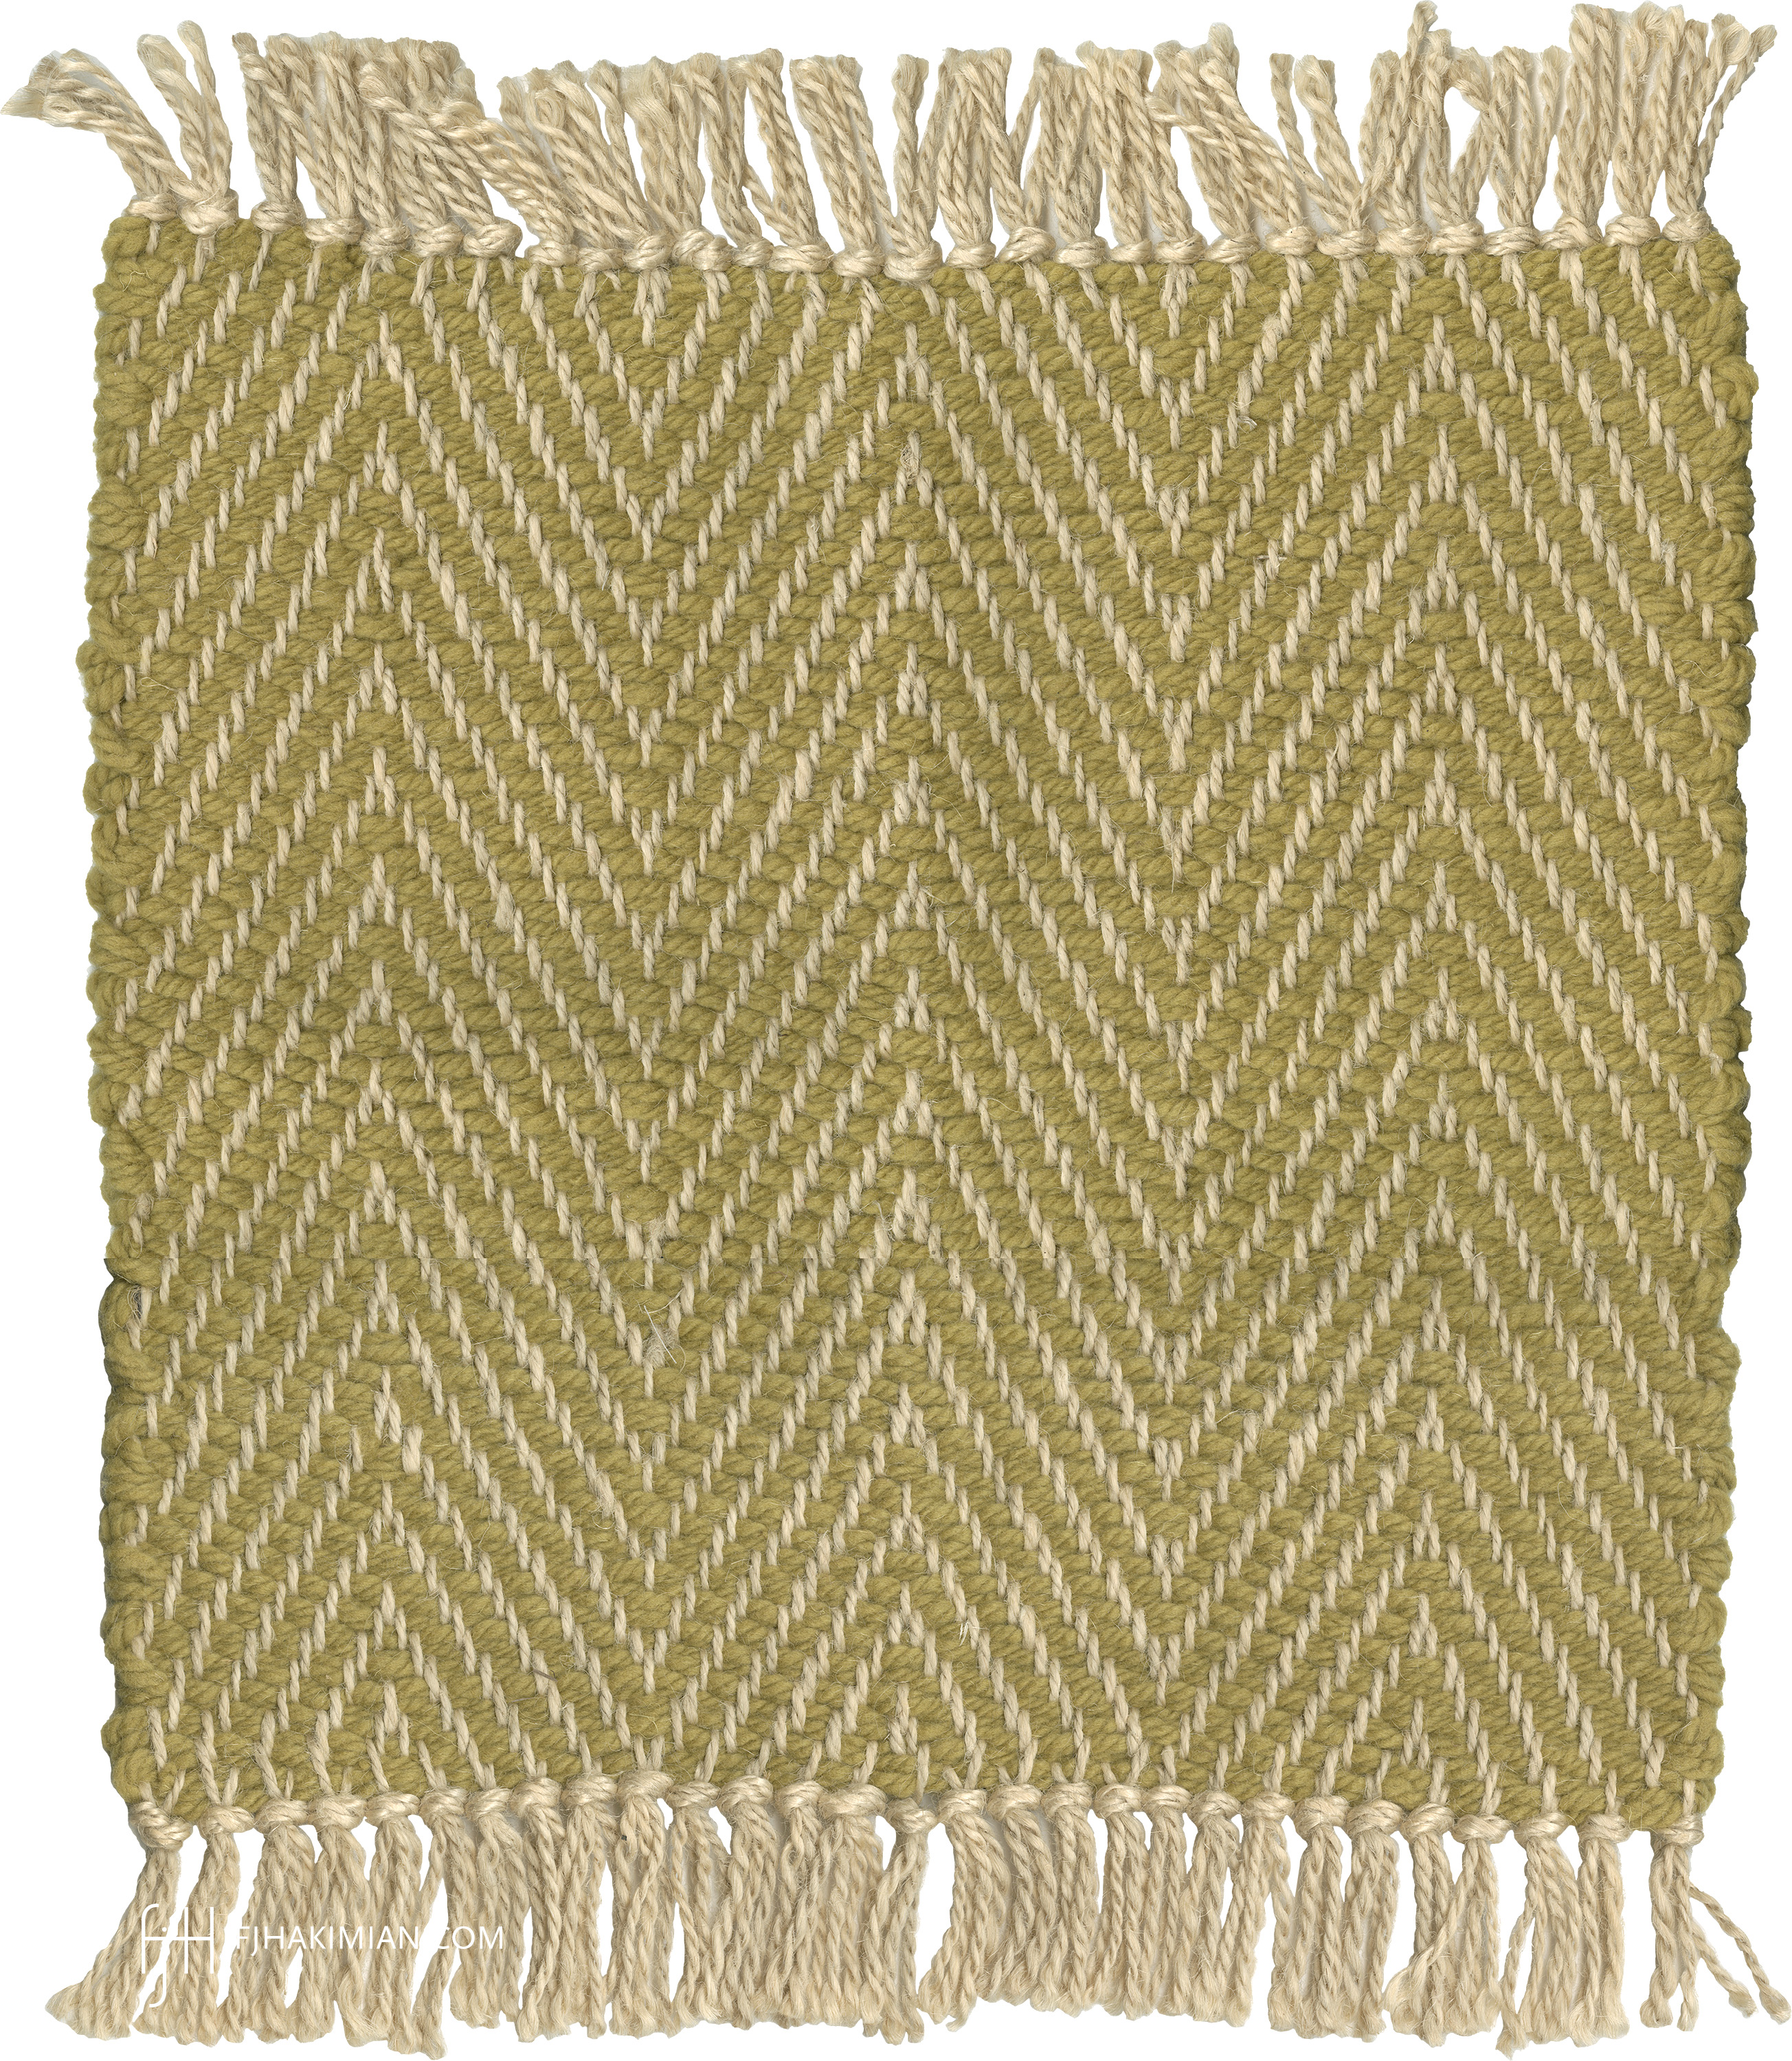 AB-Asynlam | Custom Spanish Carpet | FJ Hakimian | Carpet Gallery in NYC